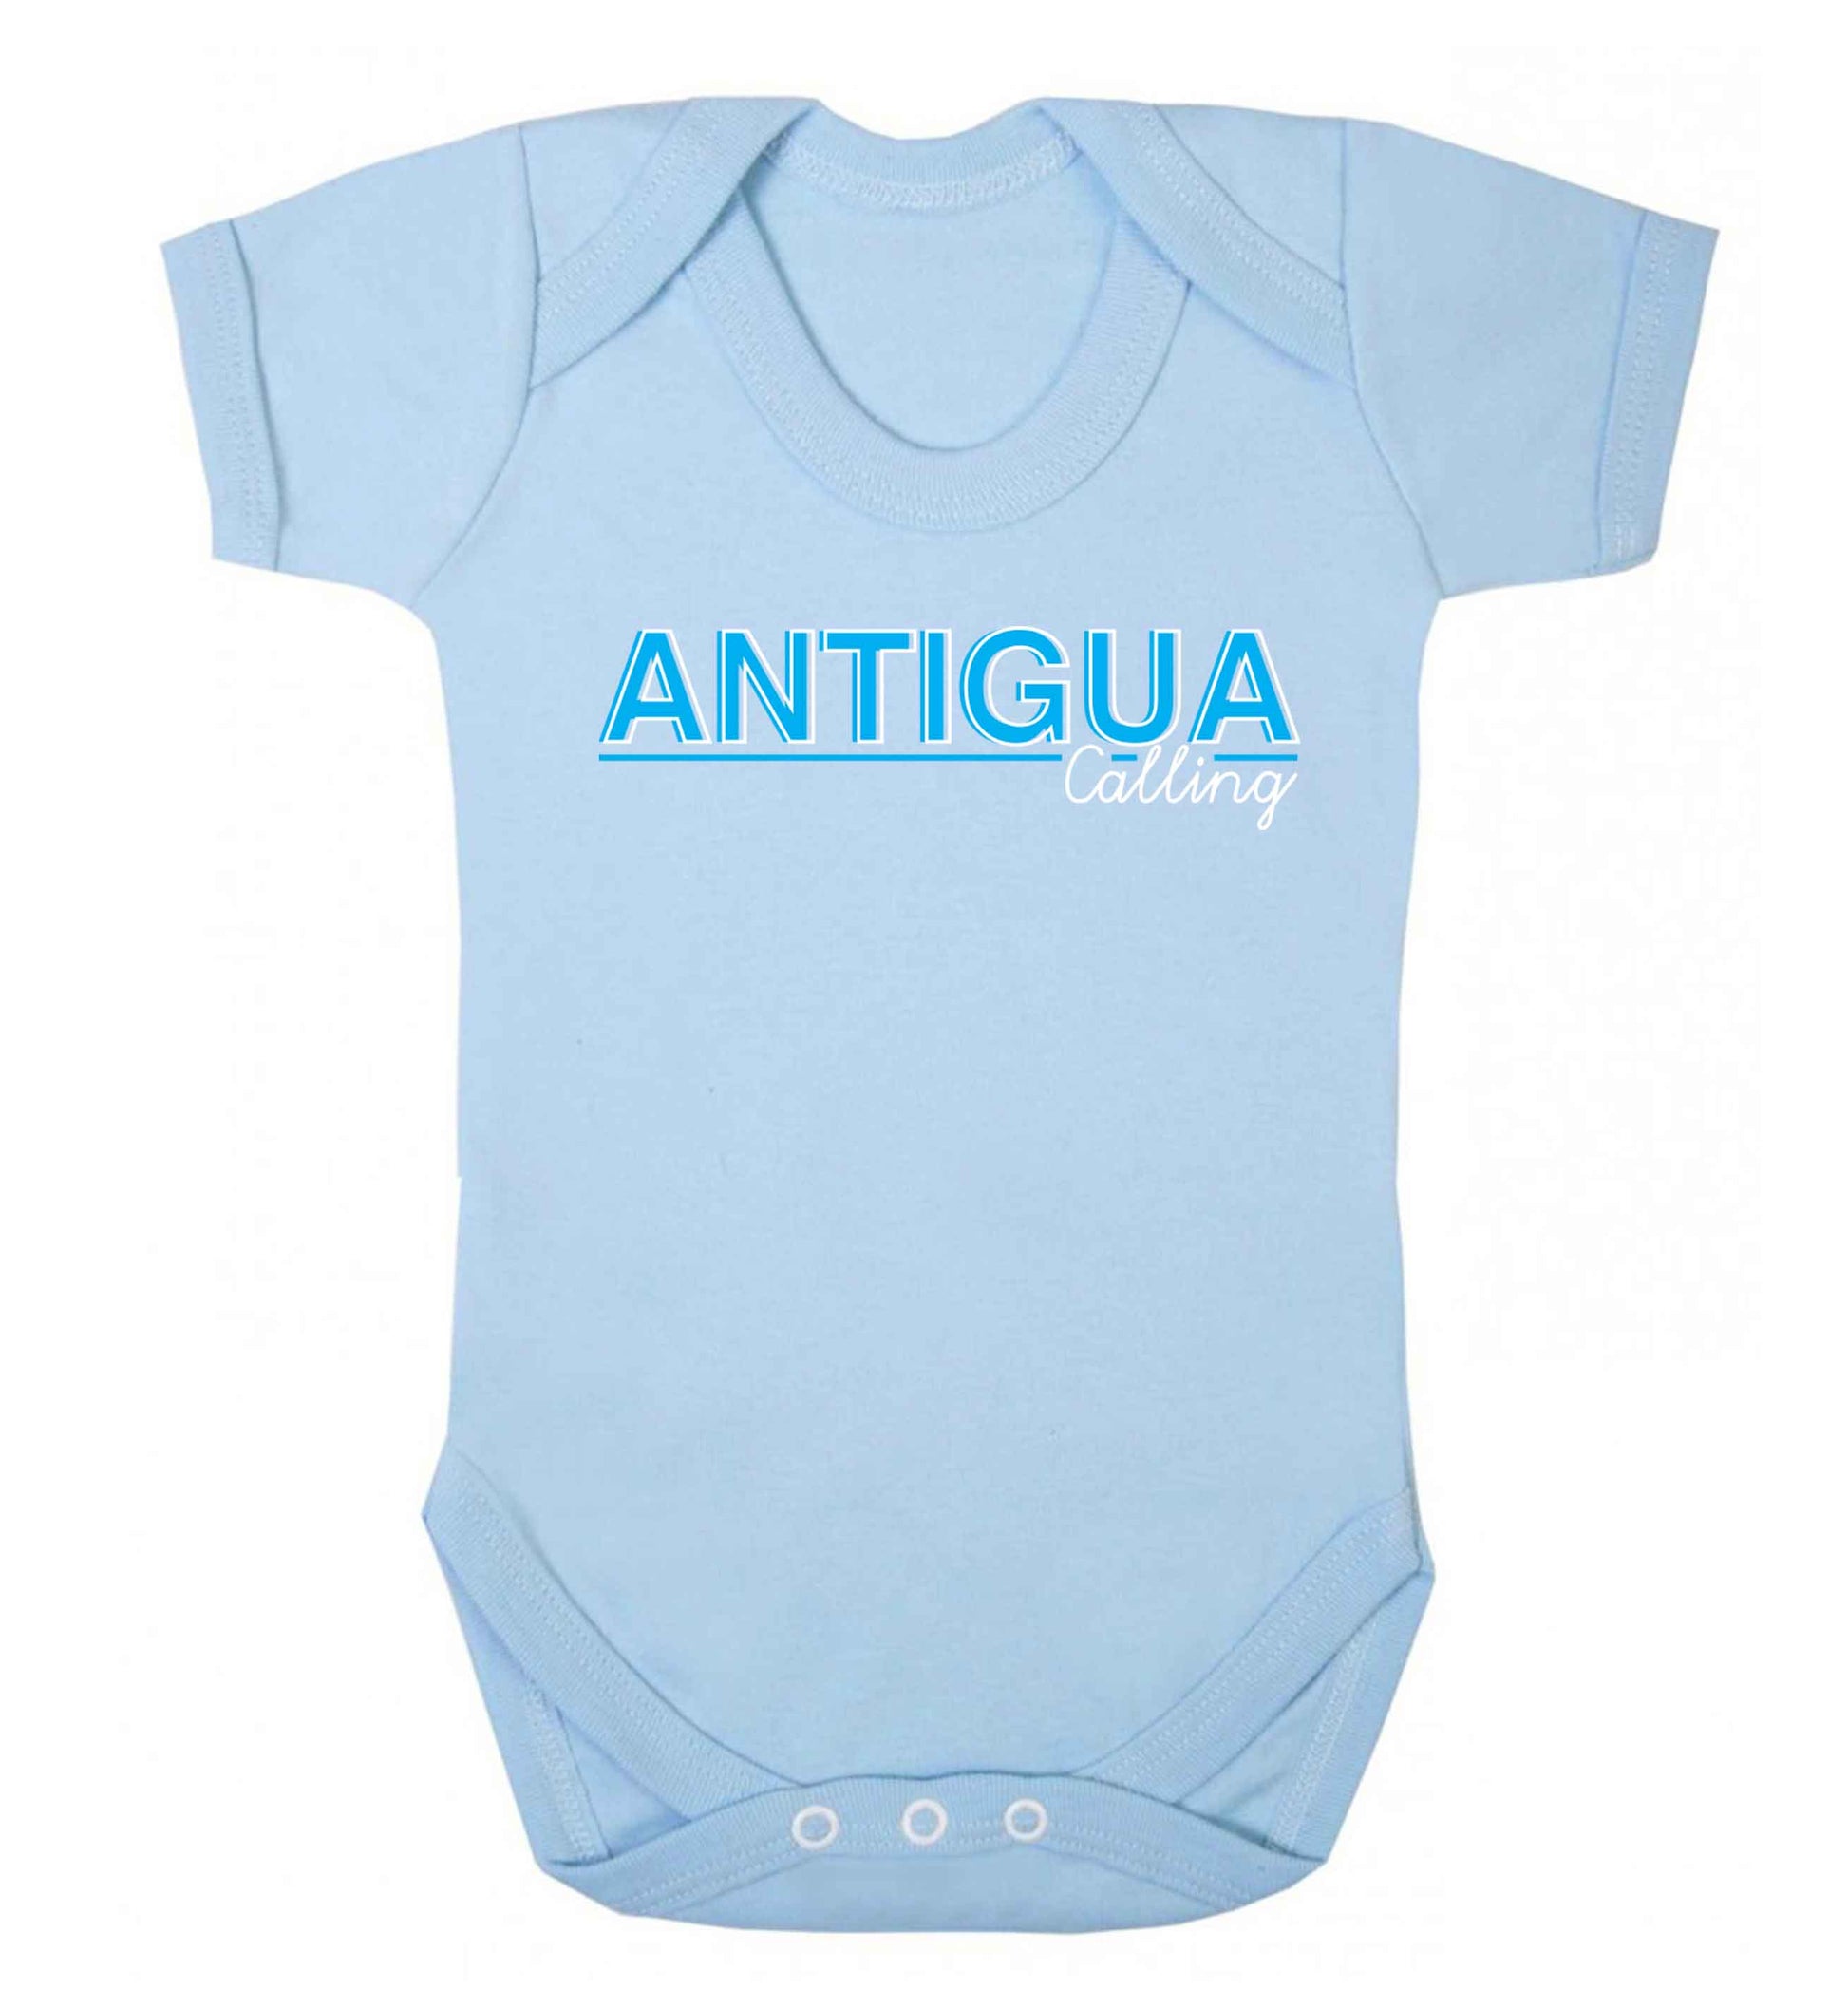 Antigua calling Baby Vest pale blue 18-24 months